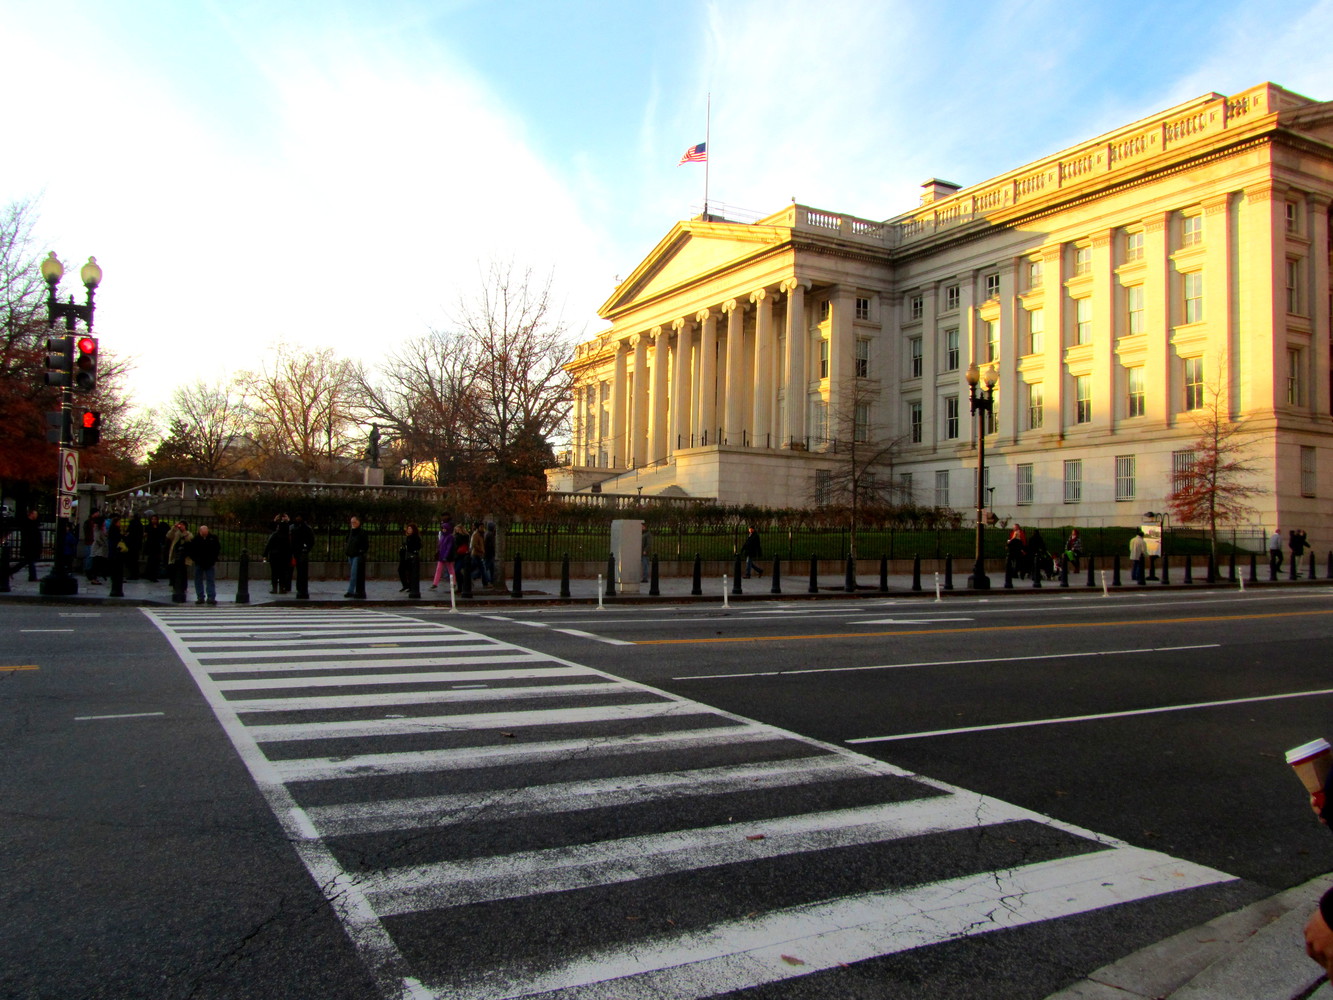 The U.S. Treasury Building